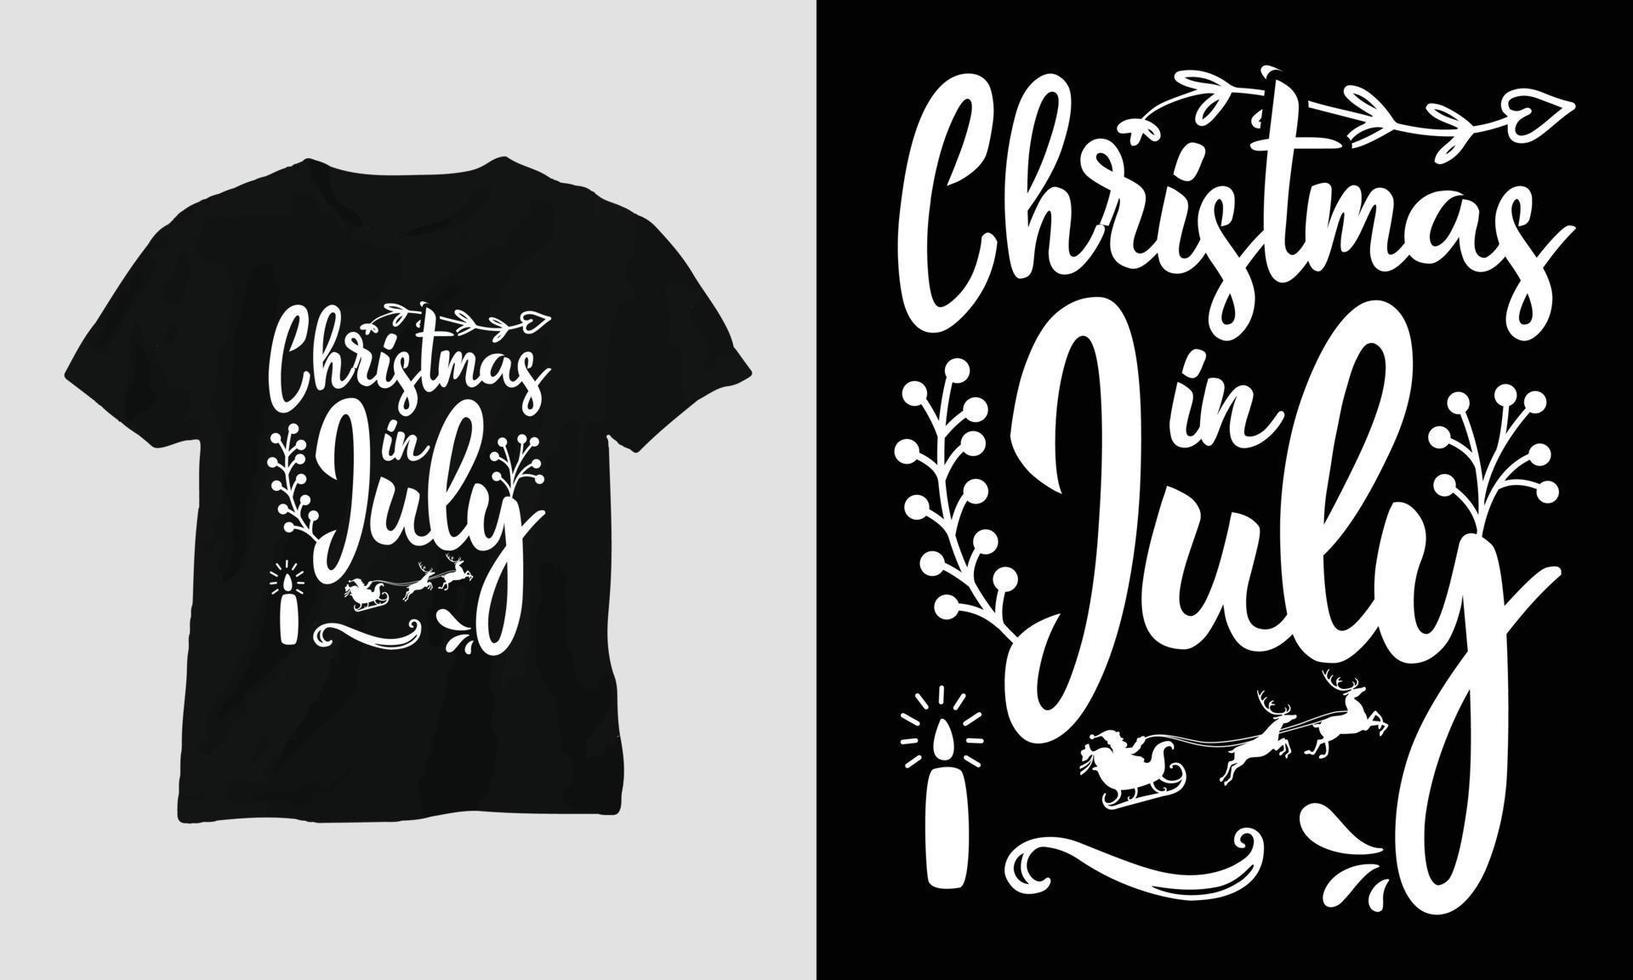 jul i juli - jul dag t-shirt design vektor